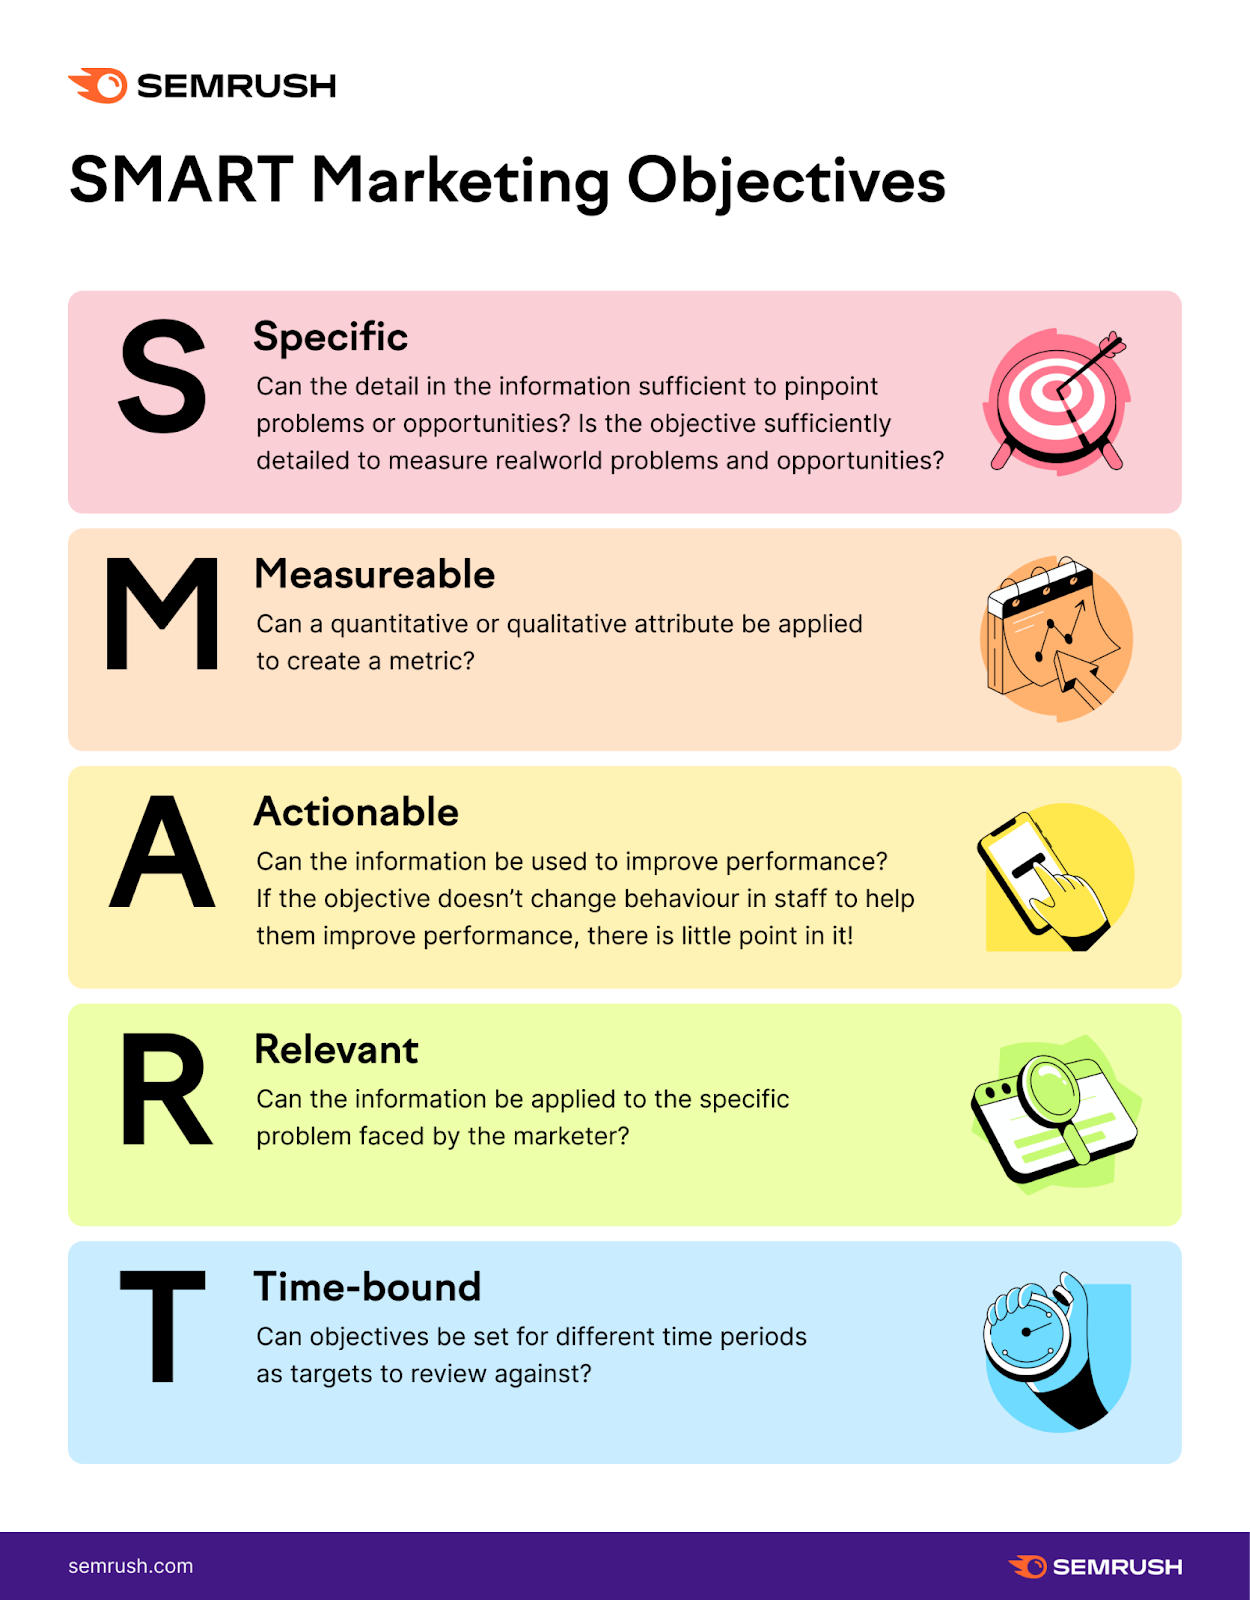 An infographic by Semrush explaining SMART marketing objectives